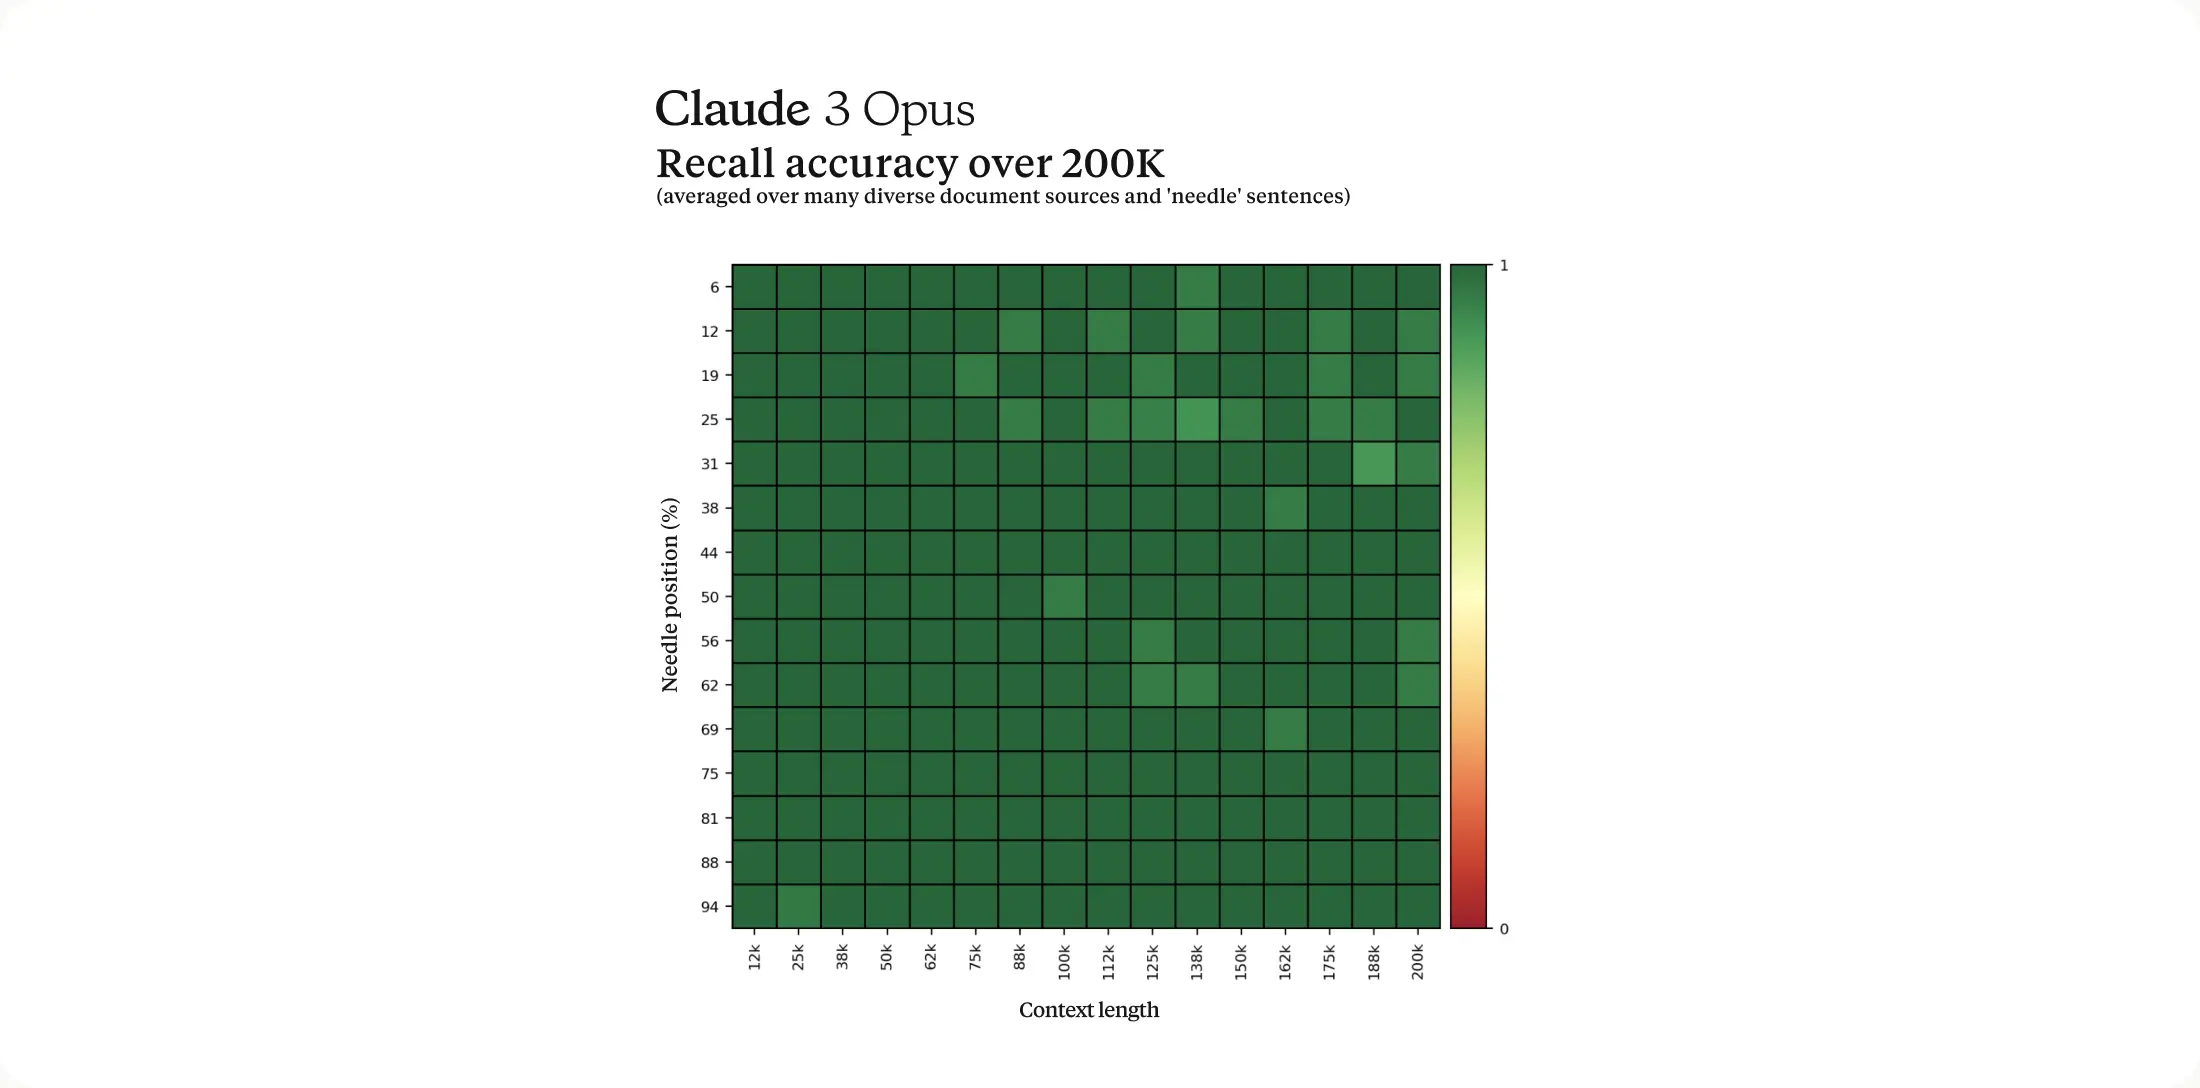 Claude 3 vs GPT-4 世界最强模型全面对比评测 | 智图派